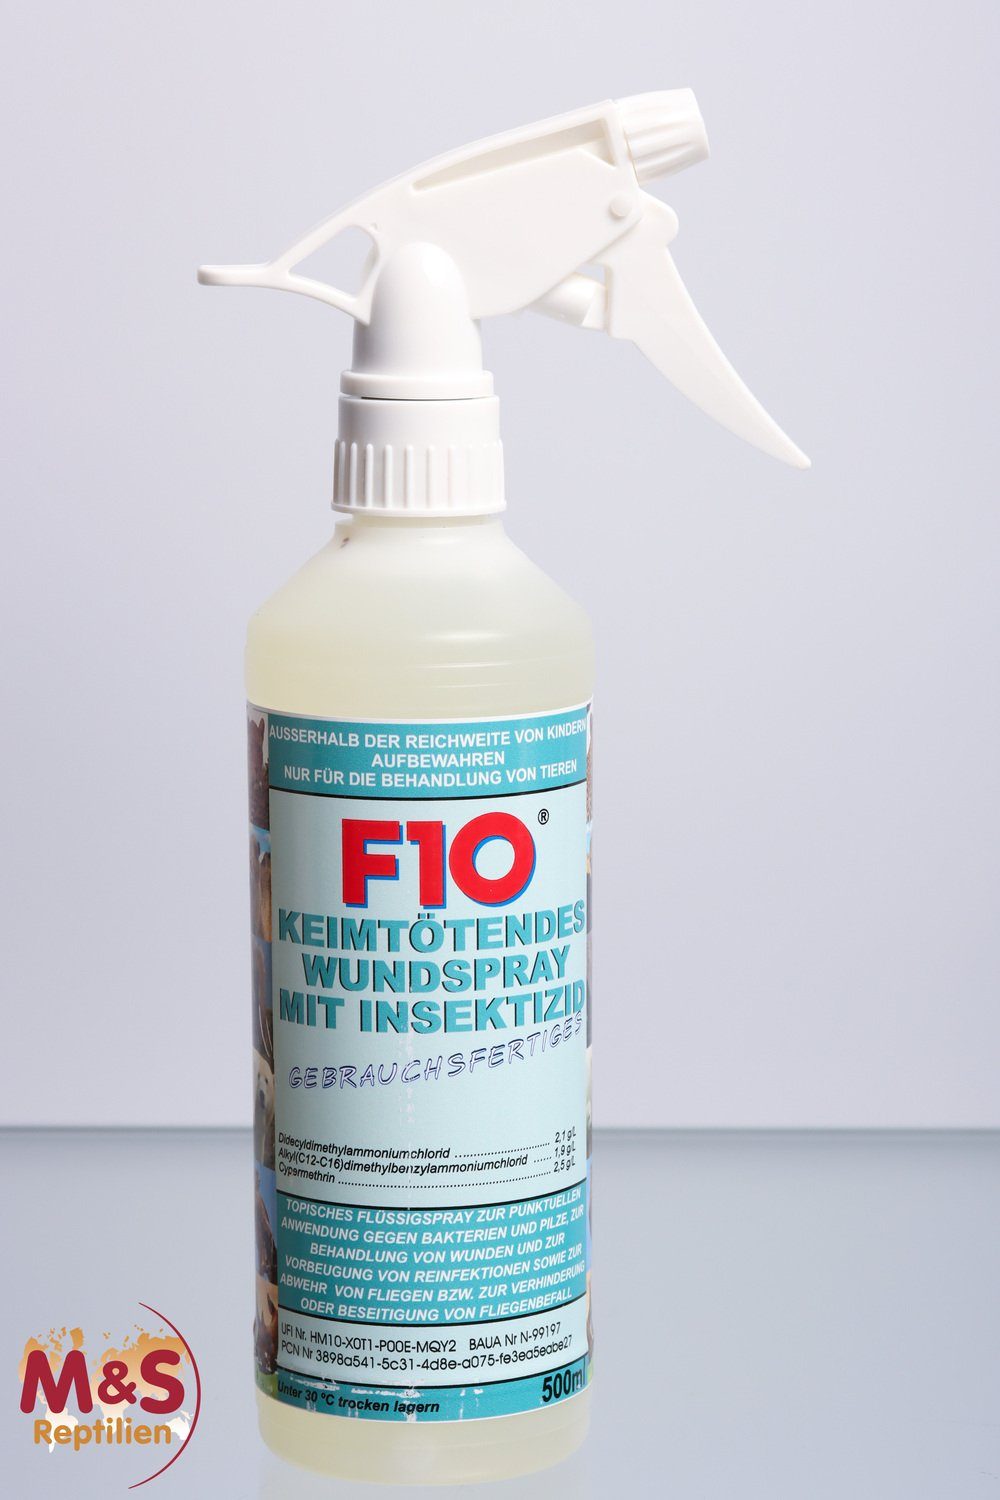 M&S Reptilien Terrarium F10, keimtötendes Wundspray mit Insektizid - Ready  to use! (500 ml Ze